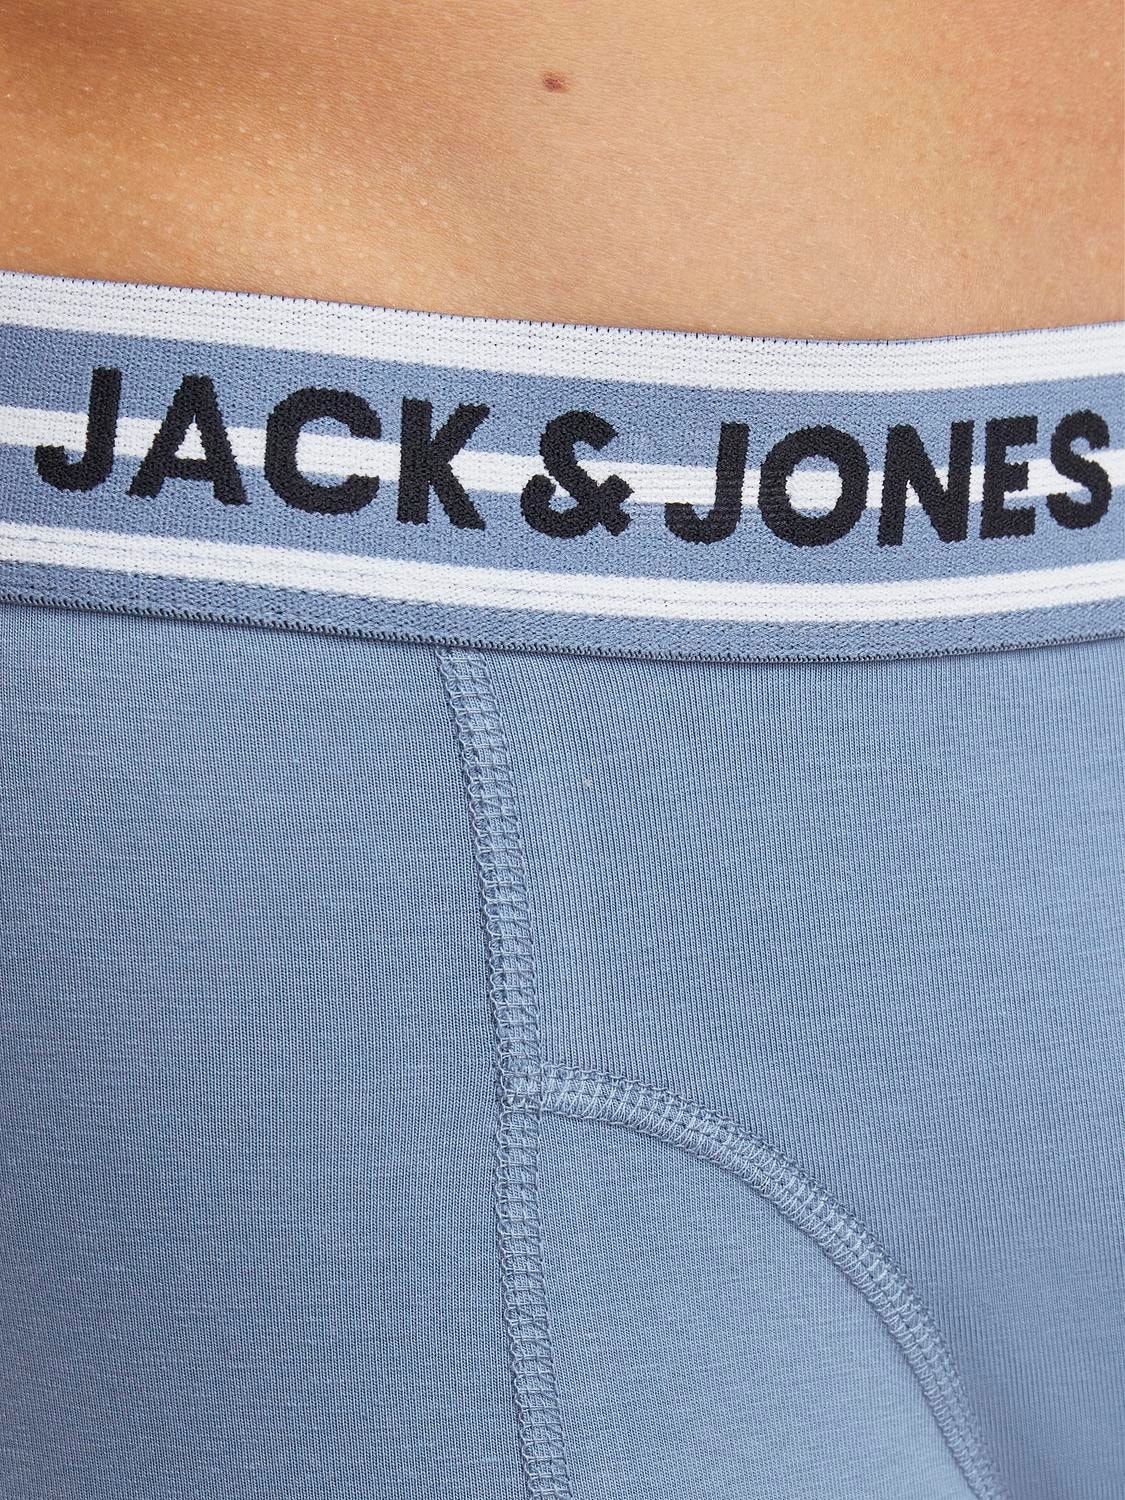 Jack & Jones Confezione da 3 Boxer -Navy Blazer - 12251419